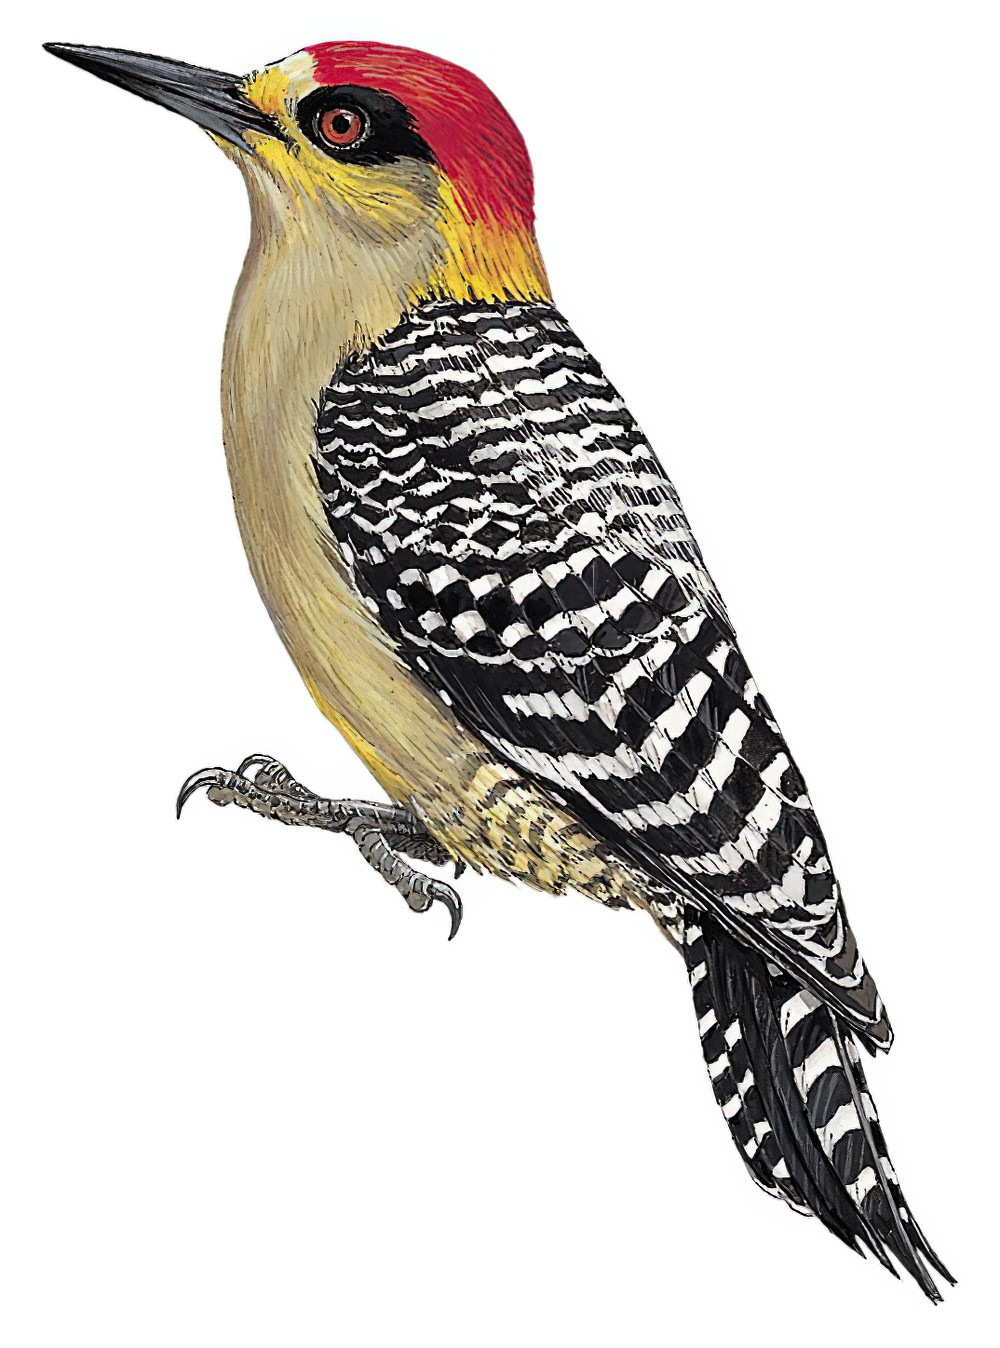 Golden-cheeked Woodpecker / Melanerpes chrysogenys